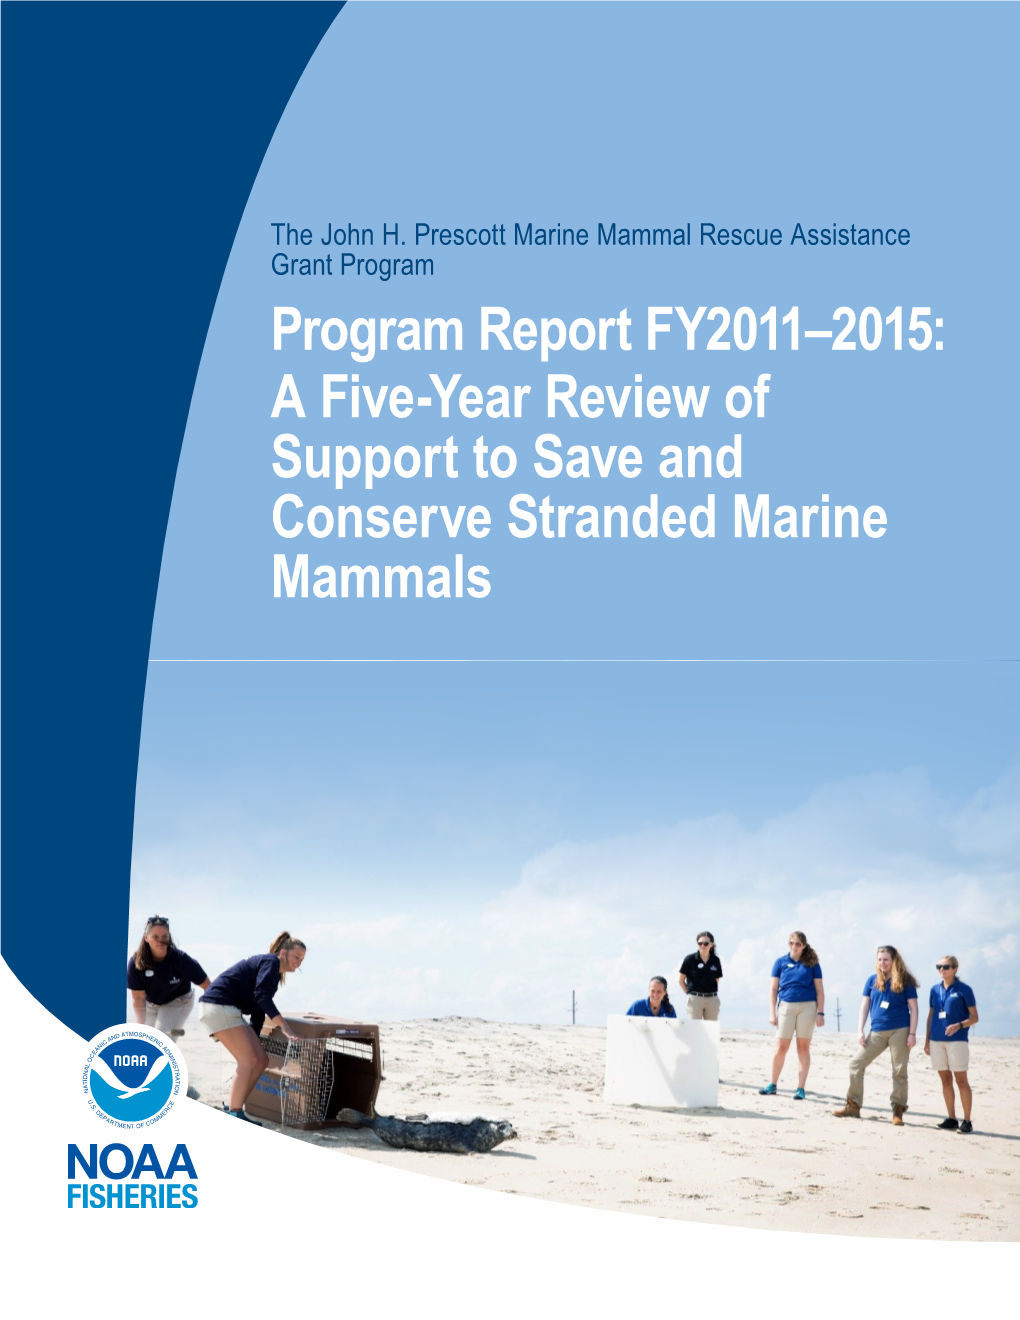 The John H. Prescott Marine Mammal Rescue Assistance Grant Program